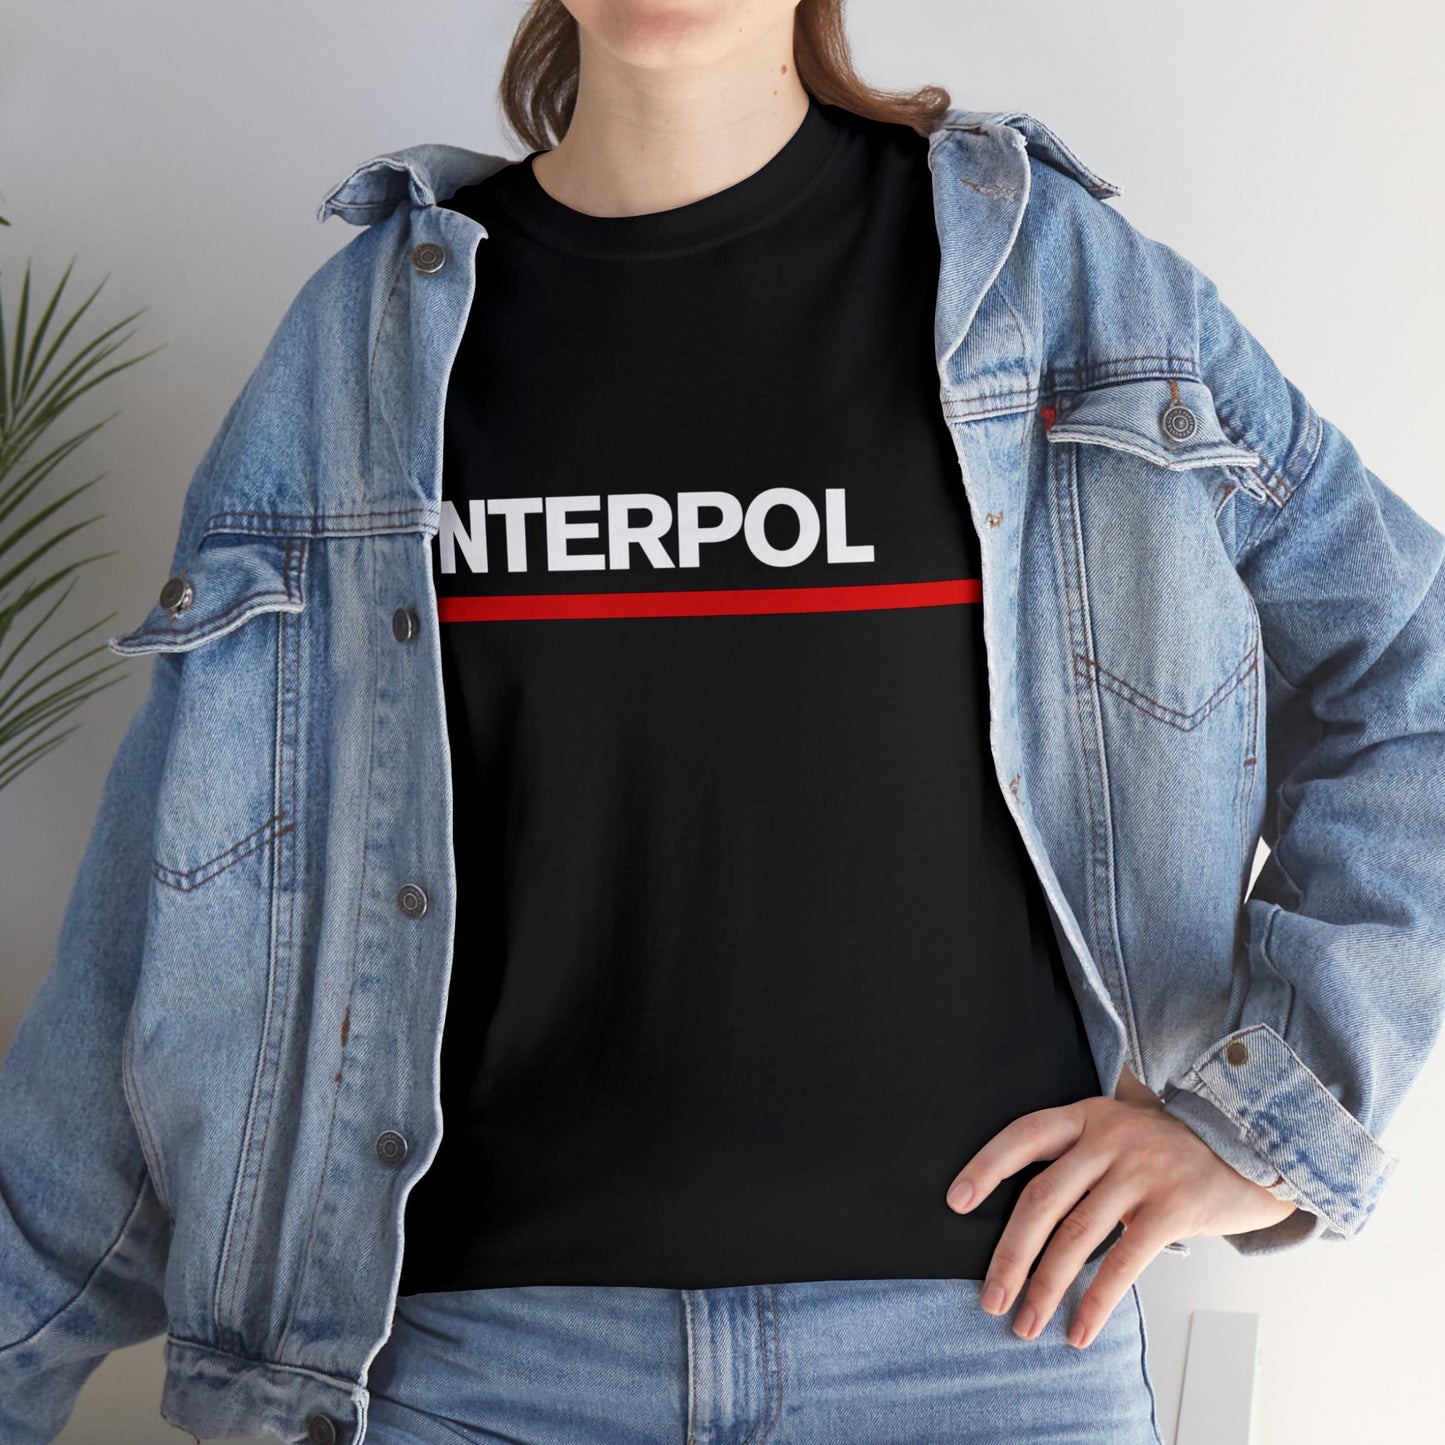 Interpol Tee